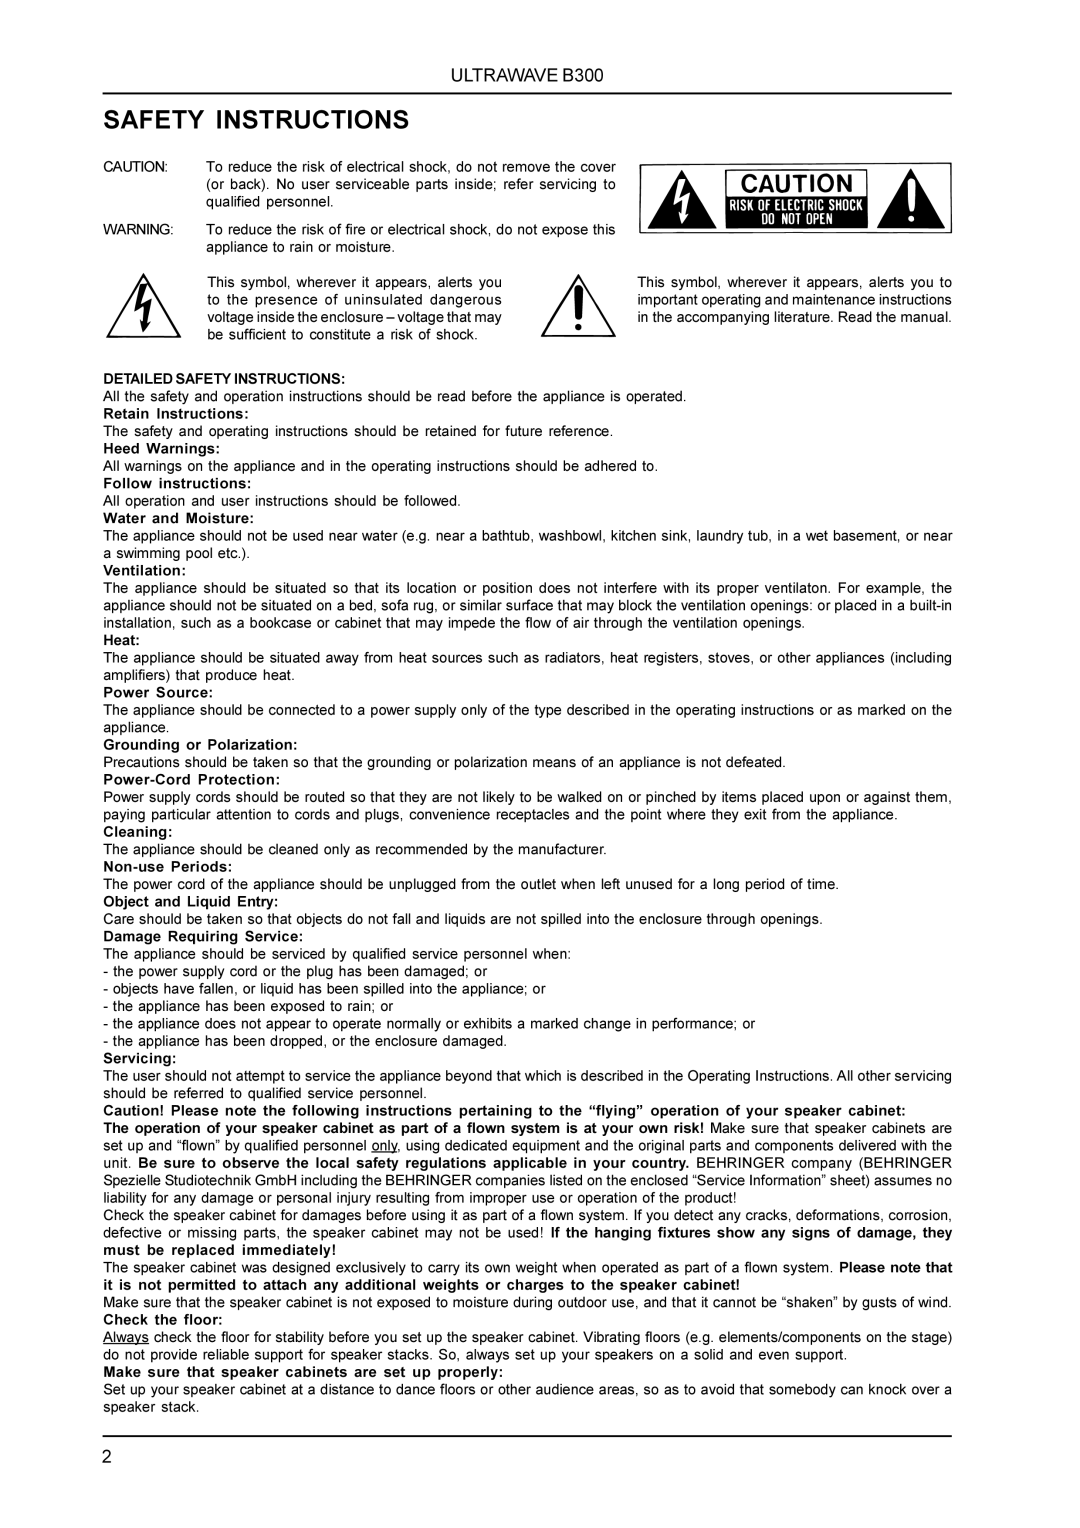 Behringer ULTRAWAVE B300 manual Safety Instructions 